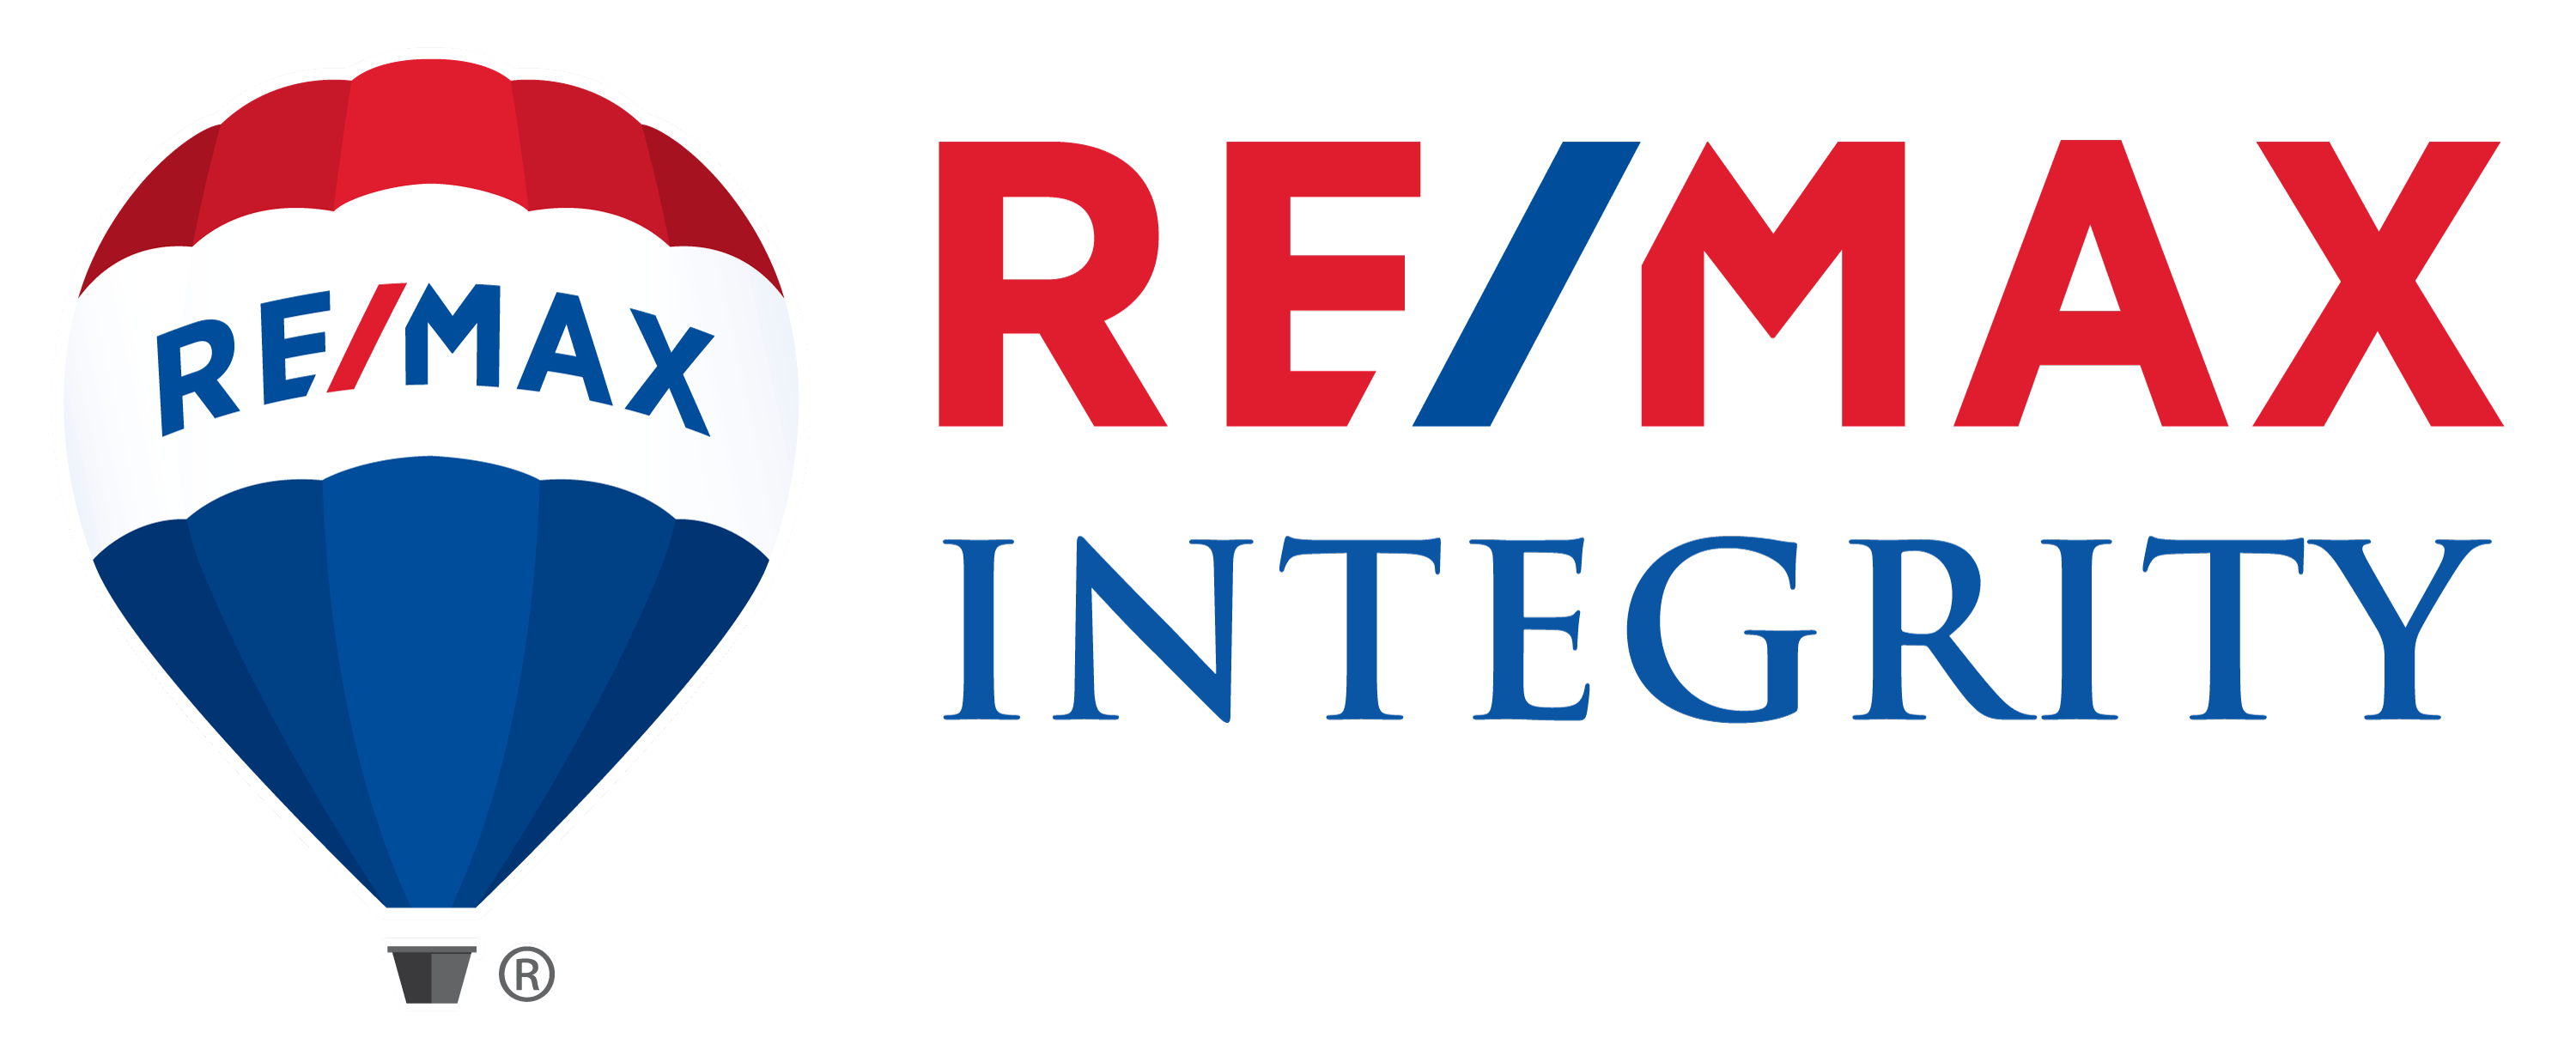 RE/MAX Logo - ReMAX Logo - CASA of Linn County